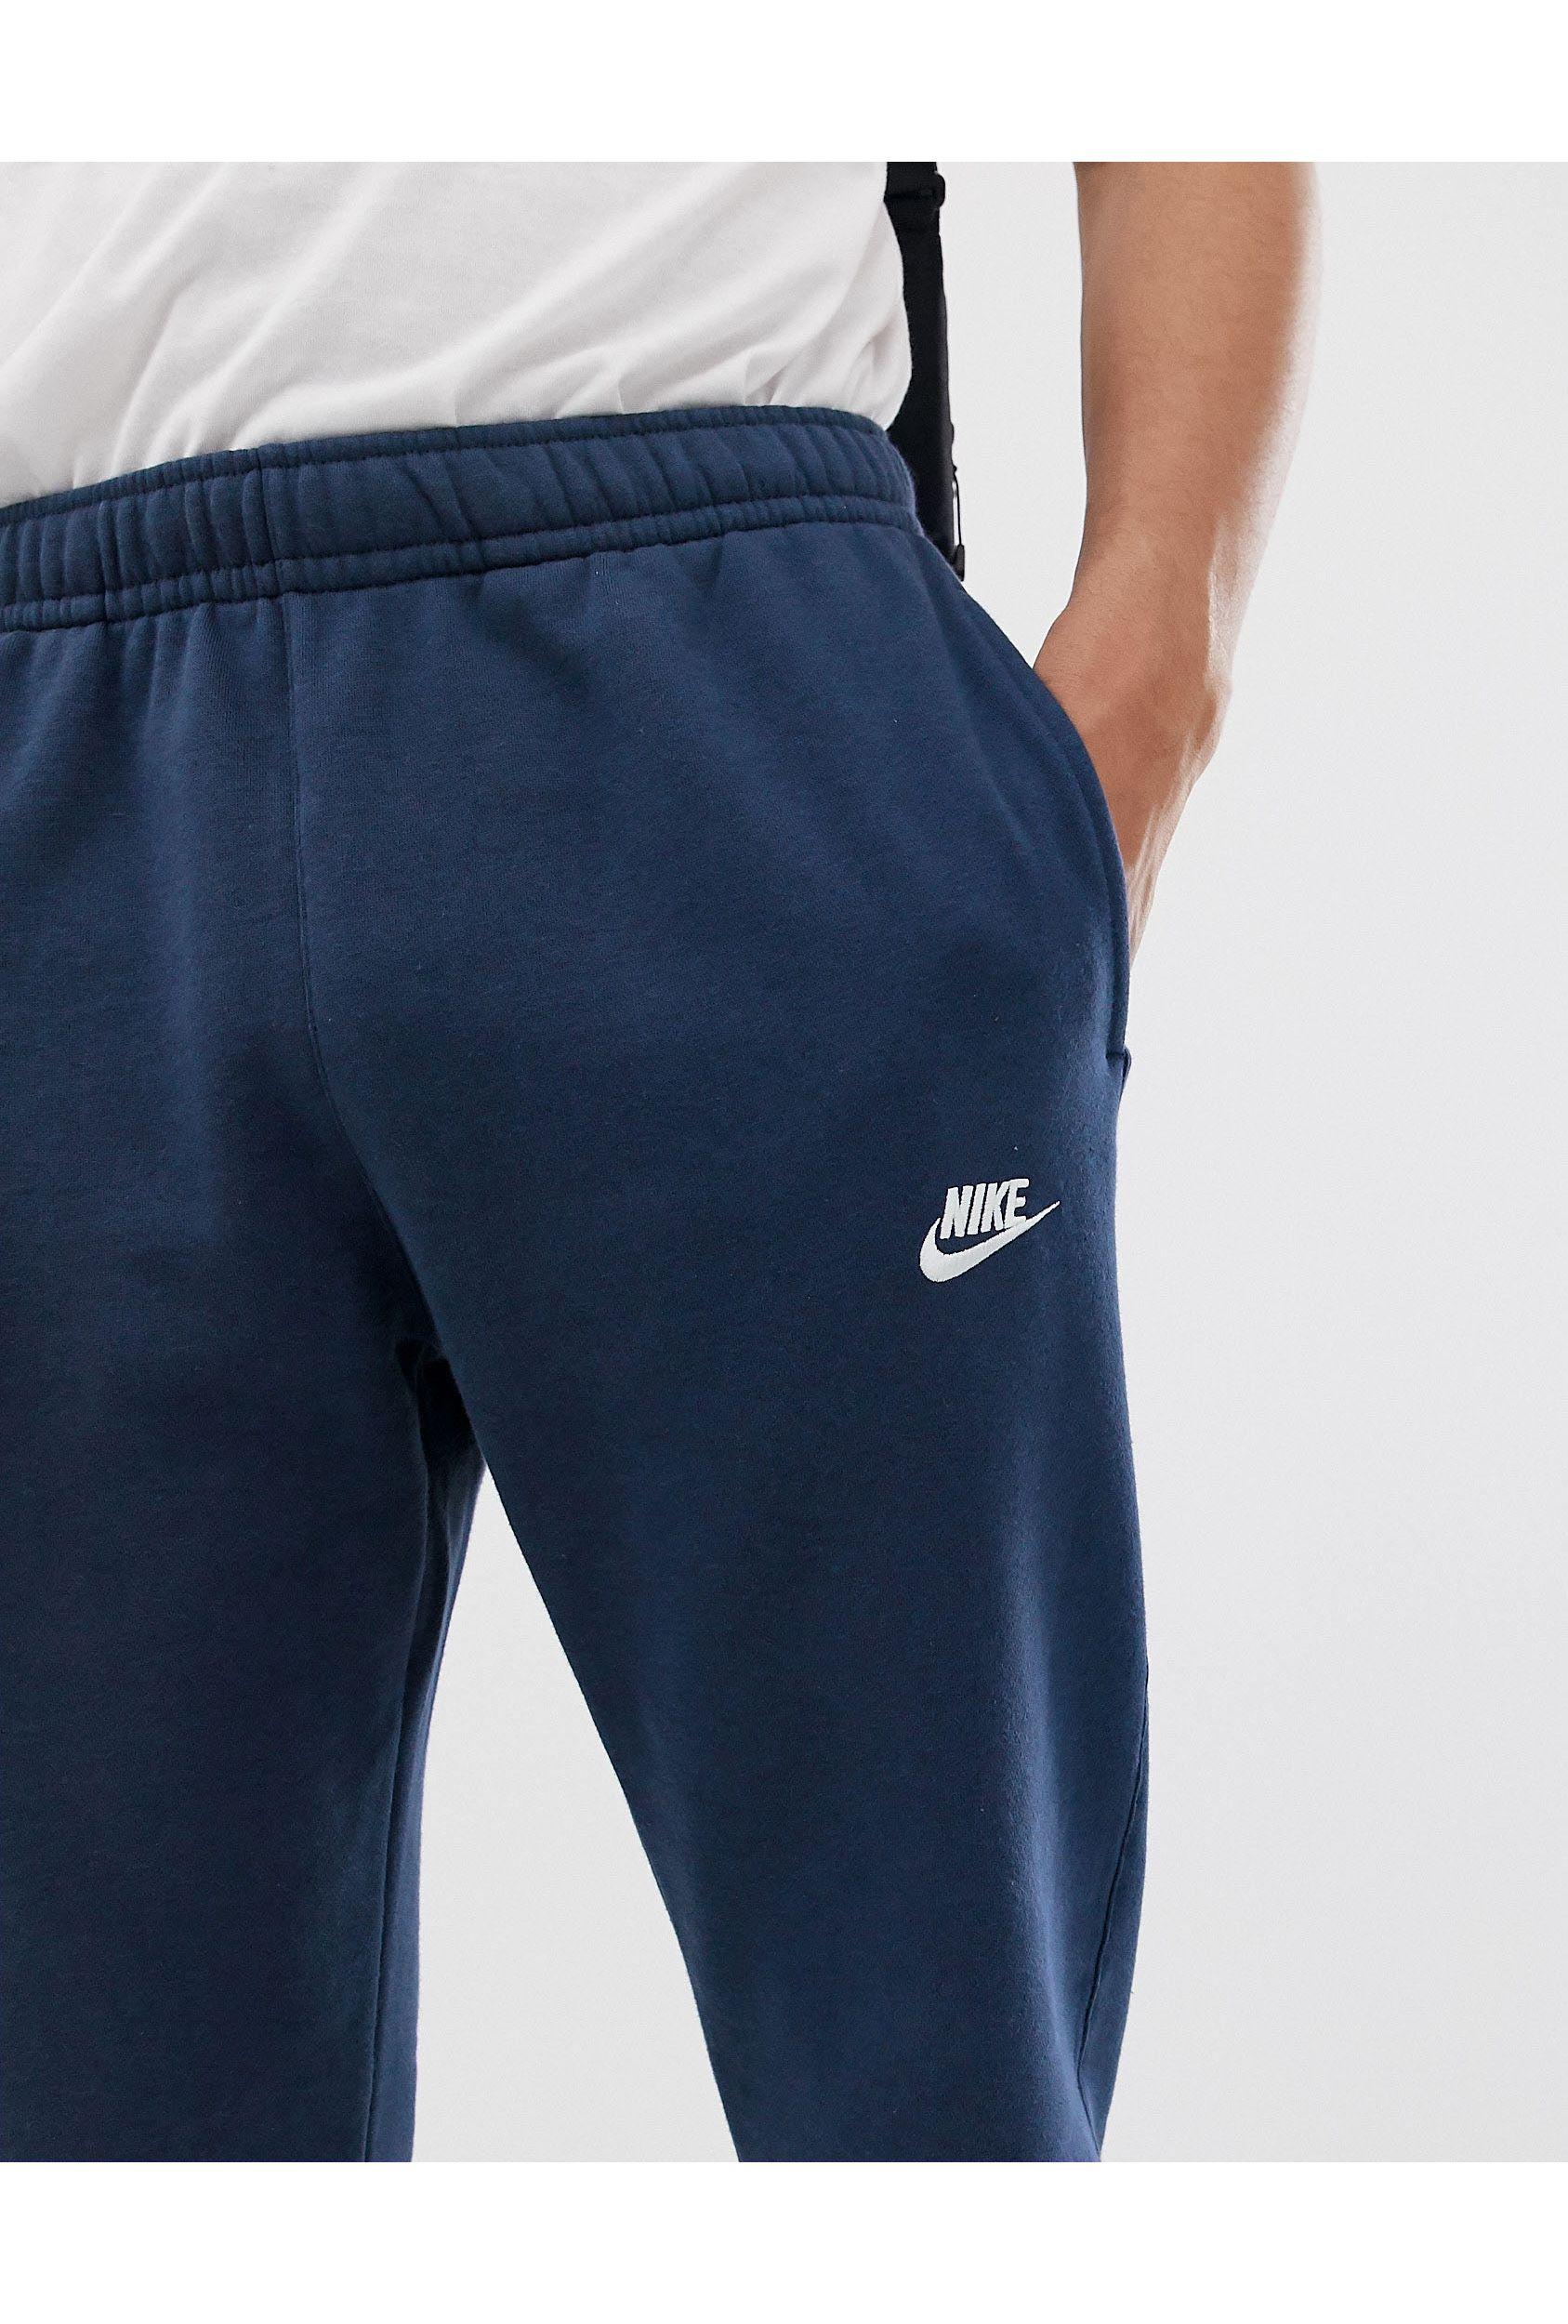 Nike Fleece Tall Cuffed Club jogger in Navy (Blue) for Men - Lyst